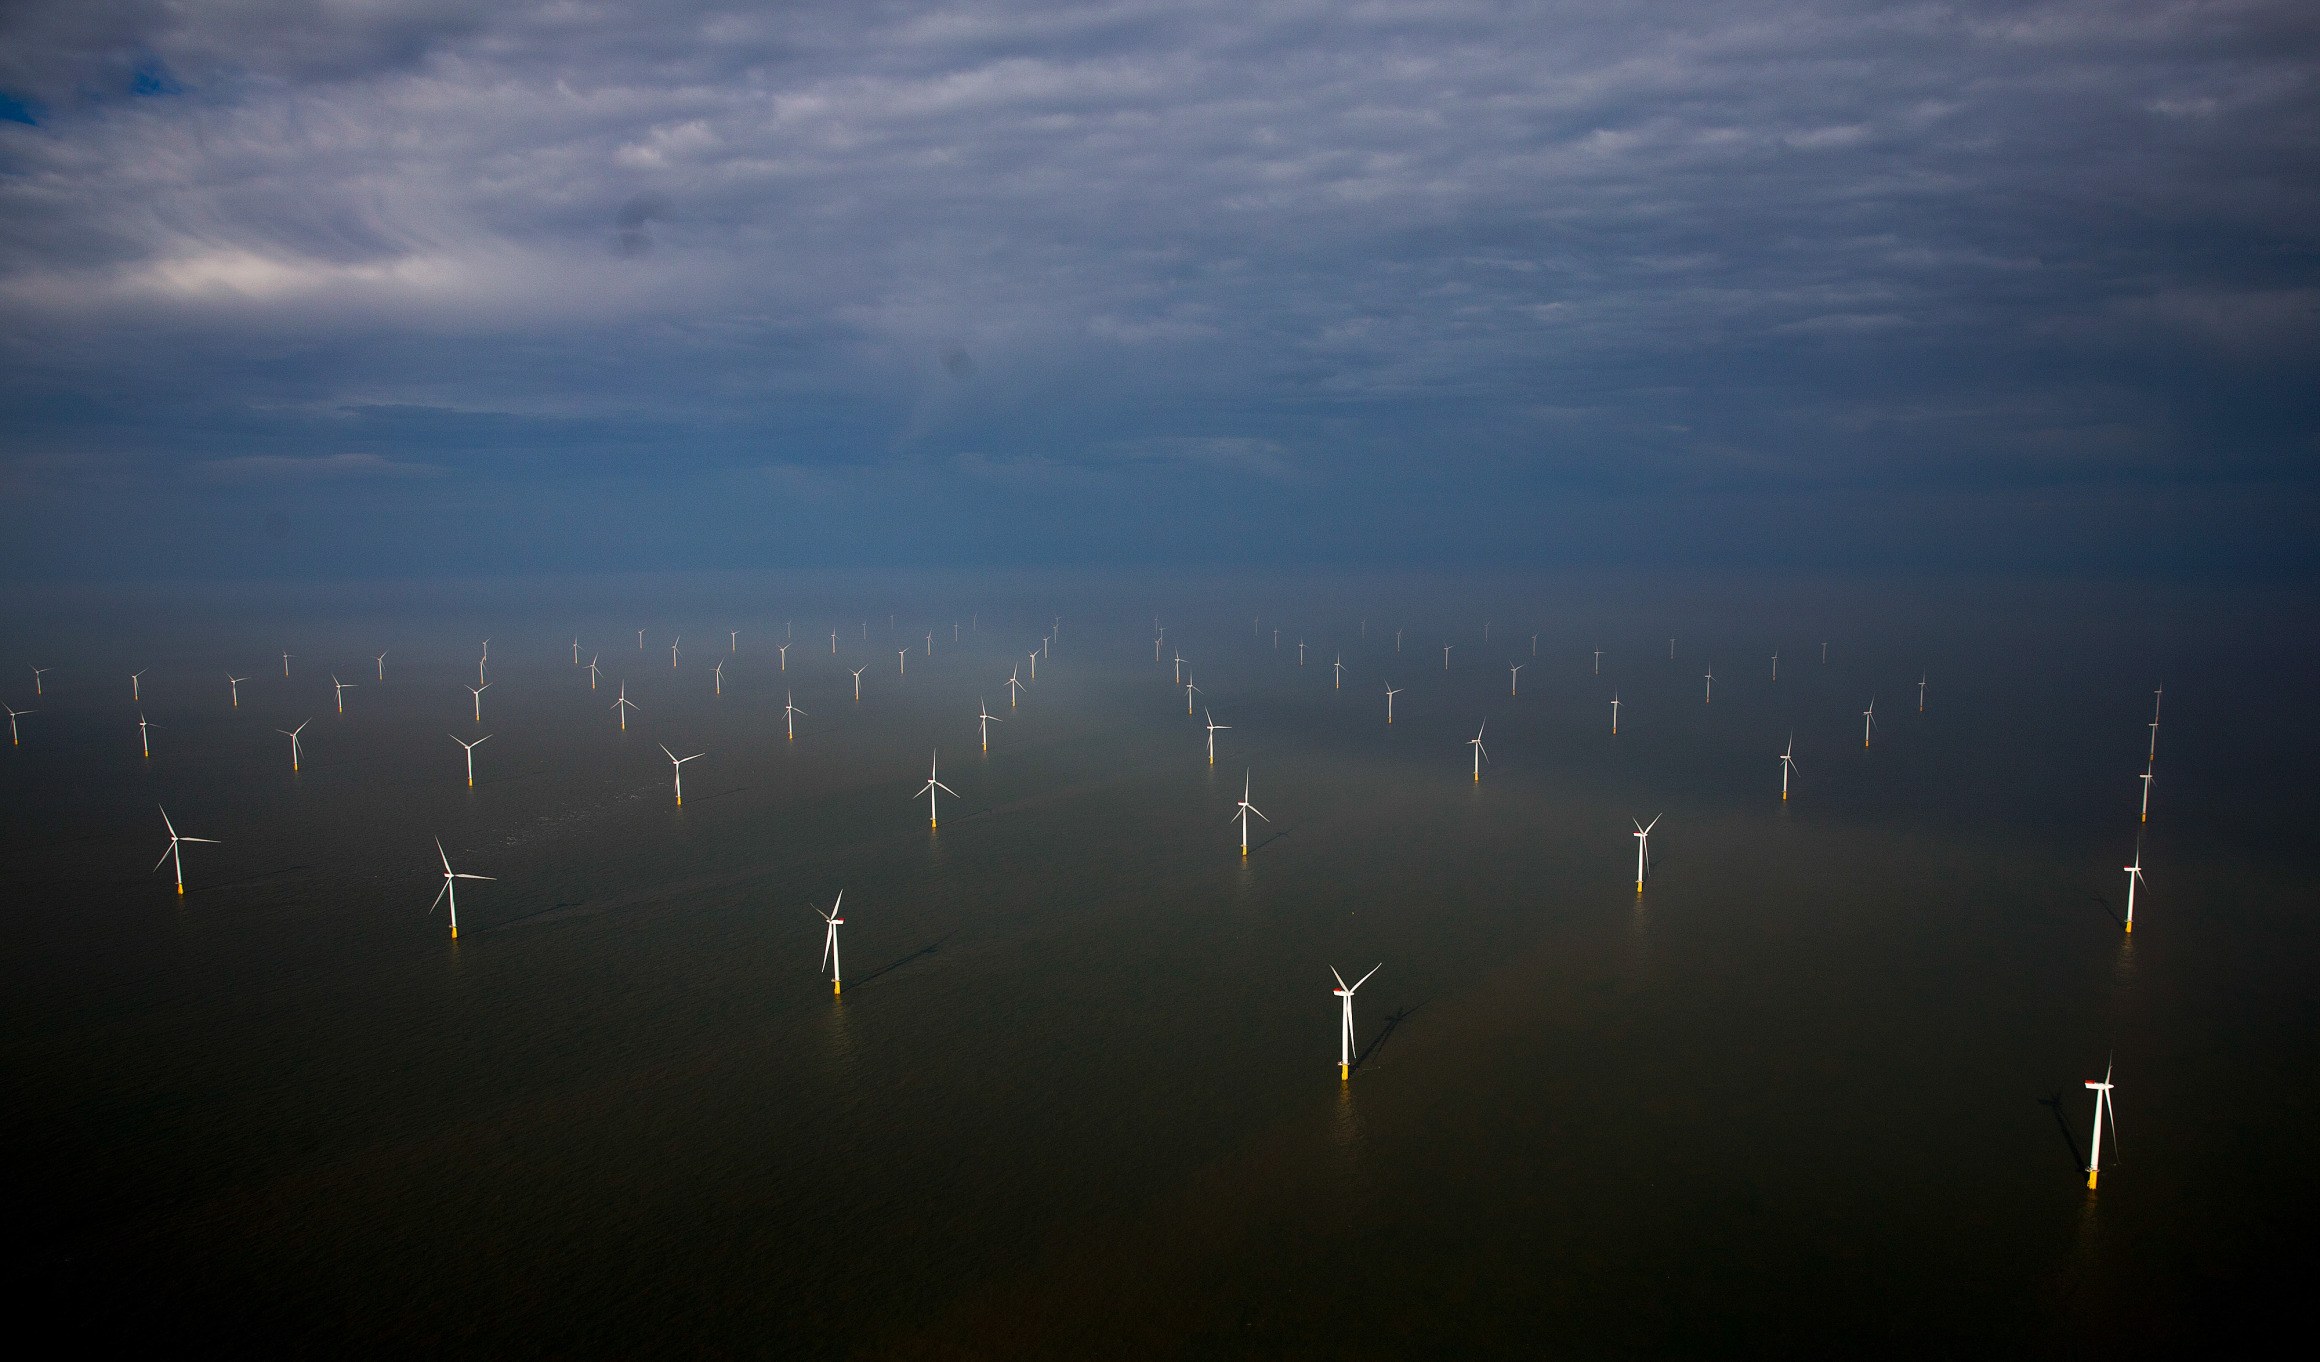 The London Array offshore wind farm in the Thames Estuary, U.K.